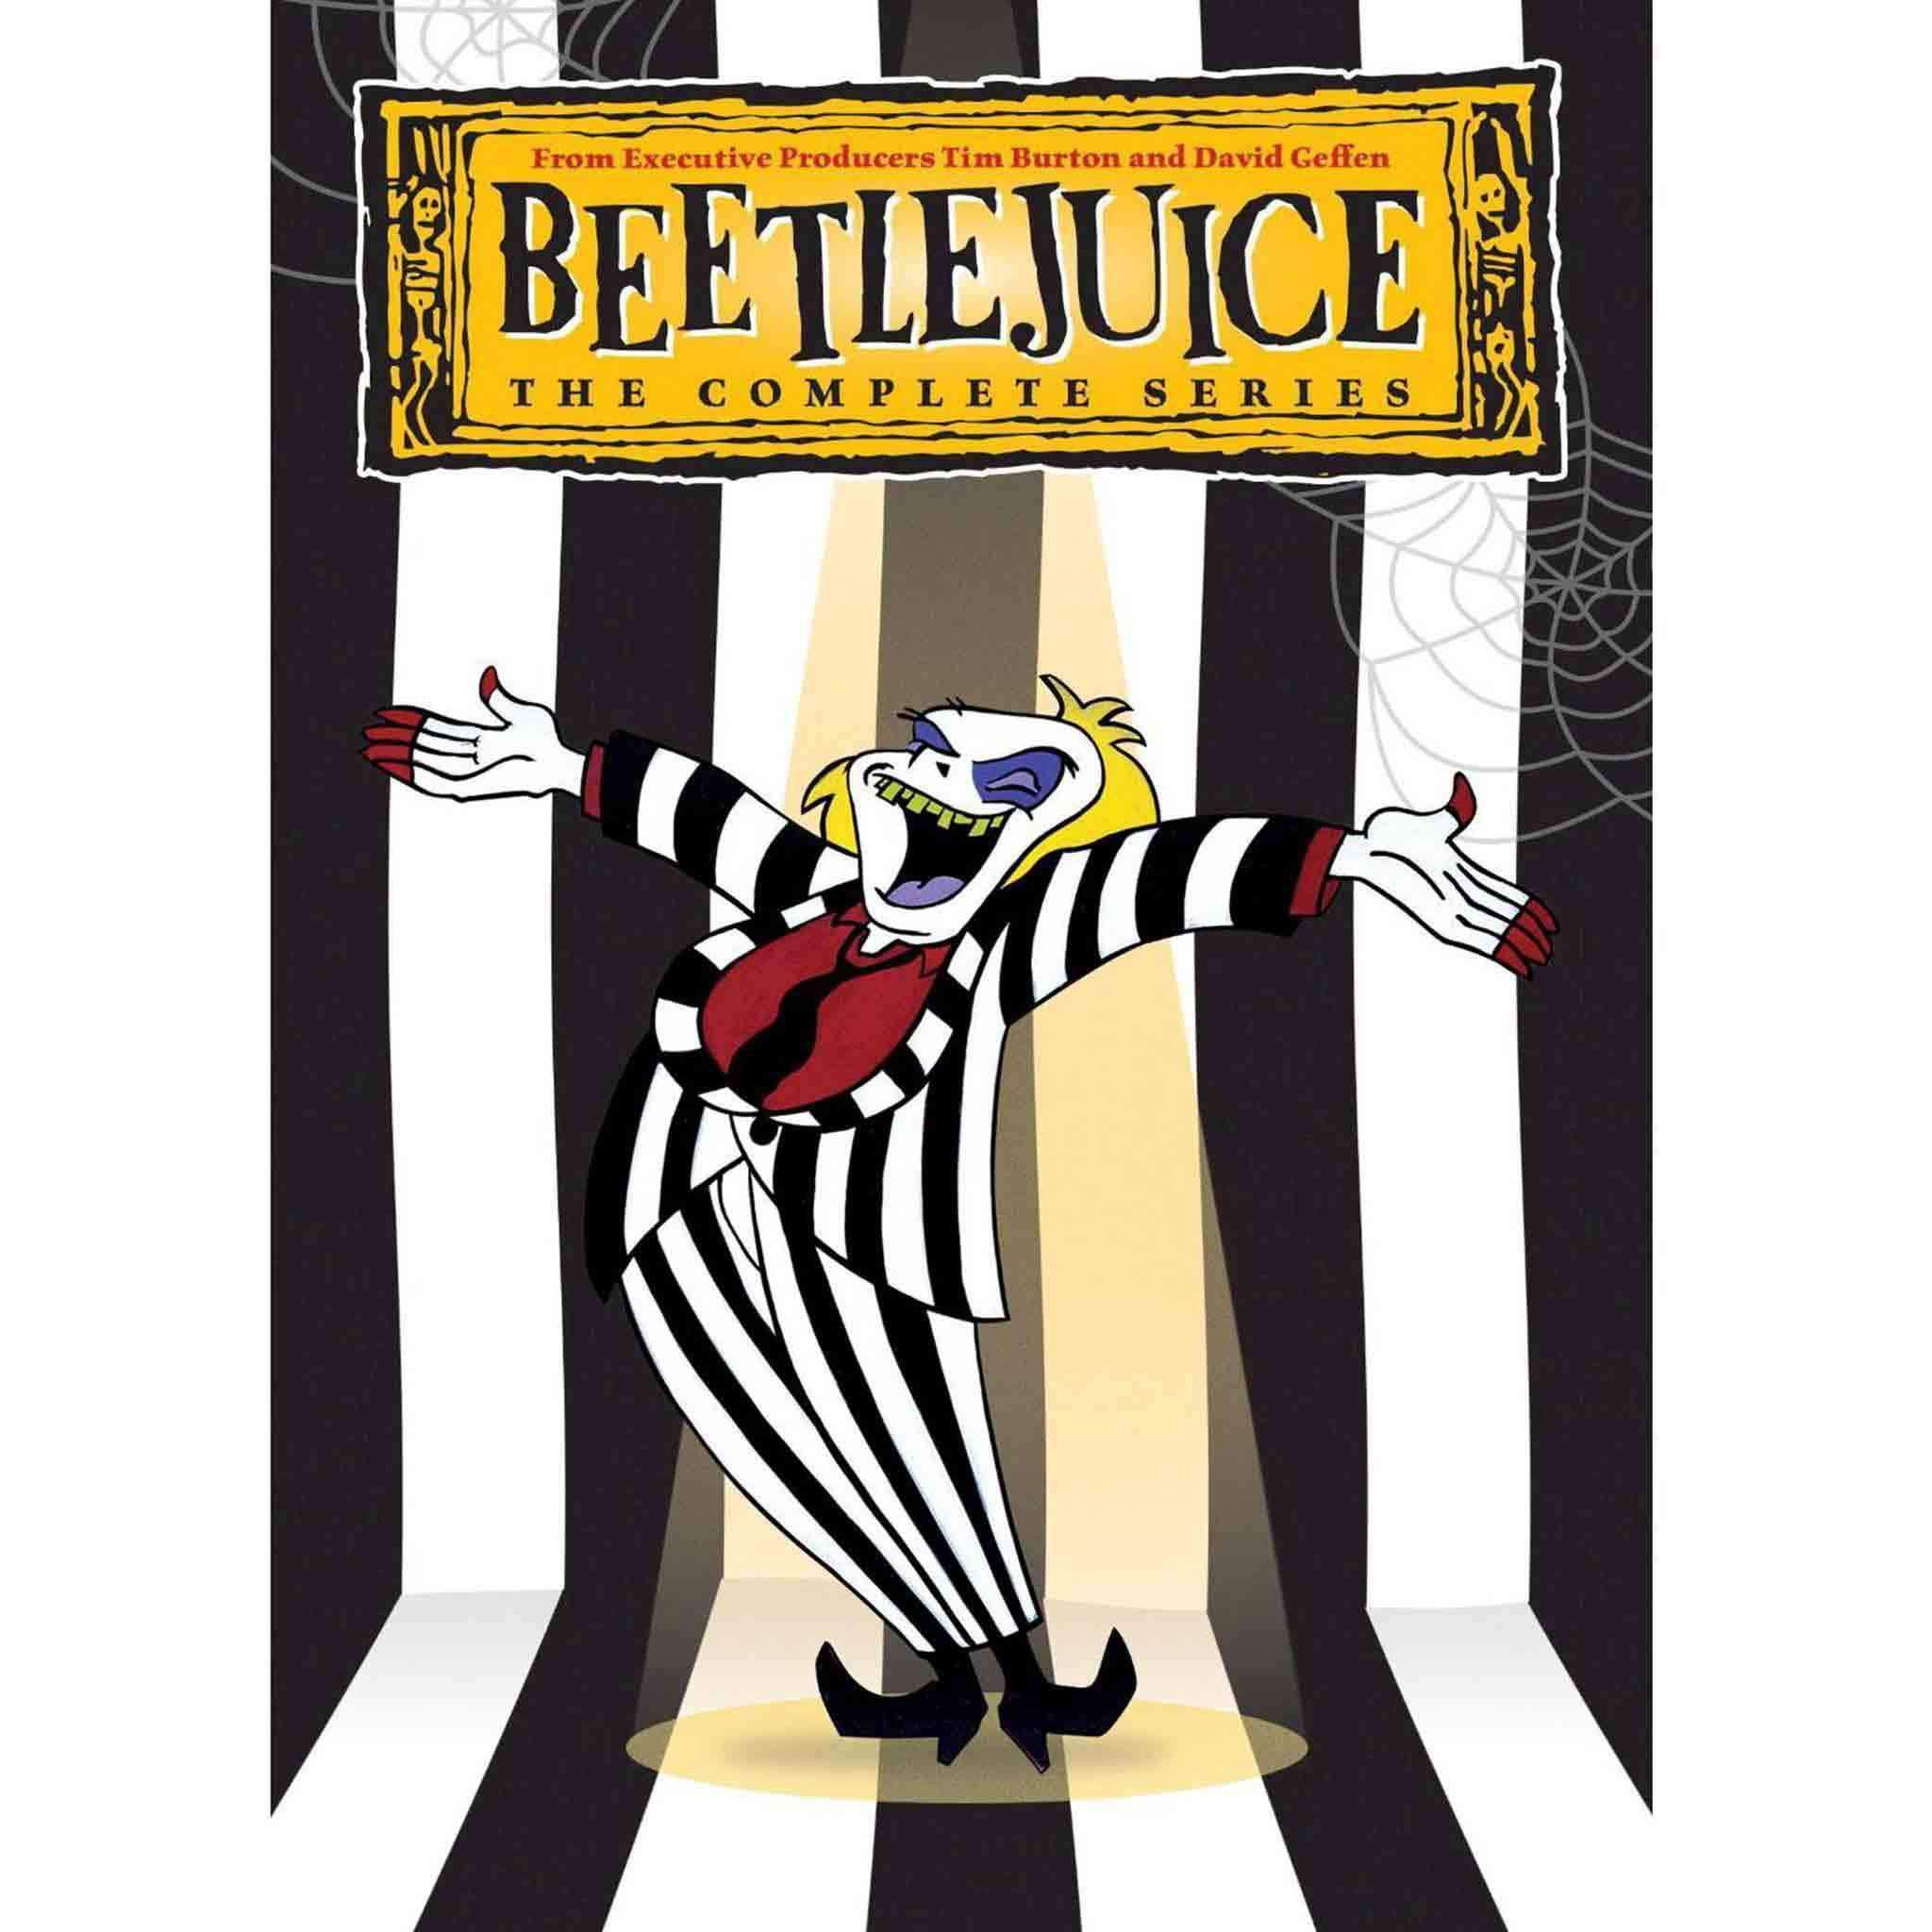 Beetlejuice DVD Series Complete Box Set Shout! Factory DVDs & Blu-ray Discs > DVDs > Box Sets